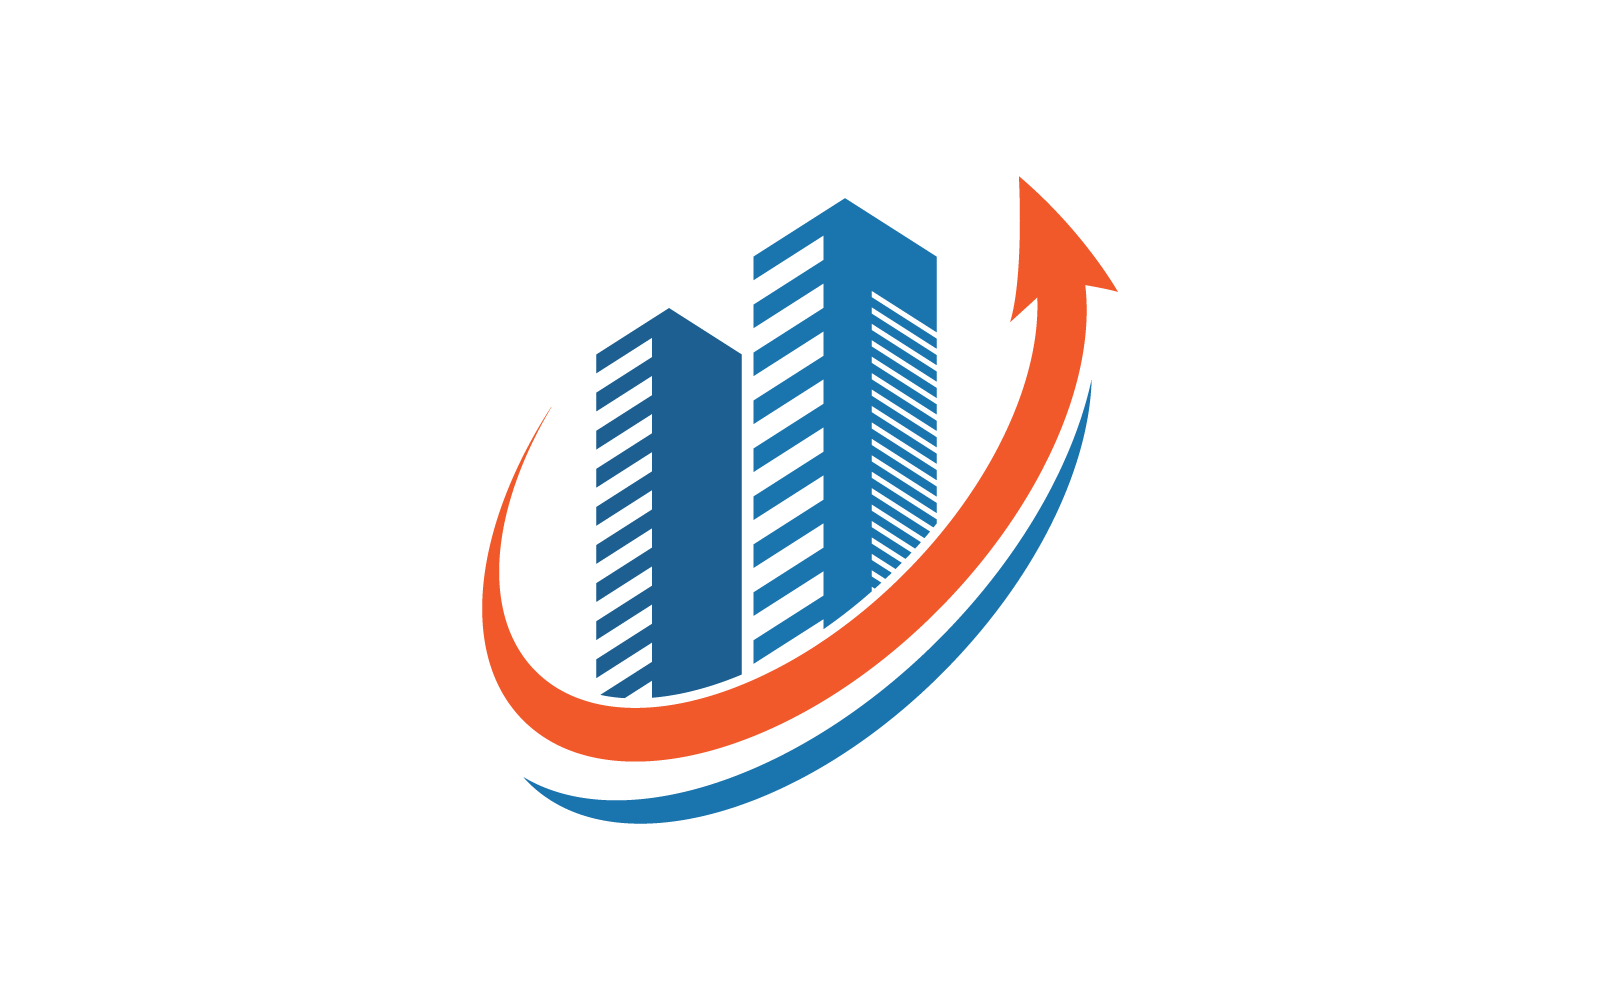 City skyline, city silhouette icon vector illustration in flat design